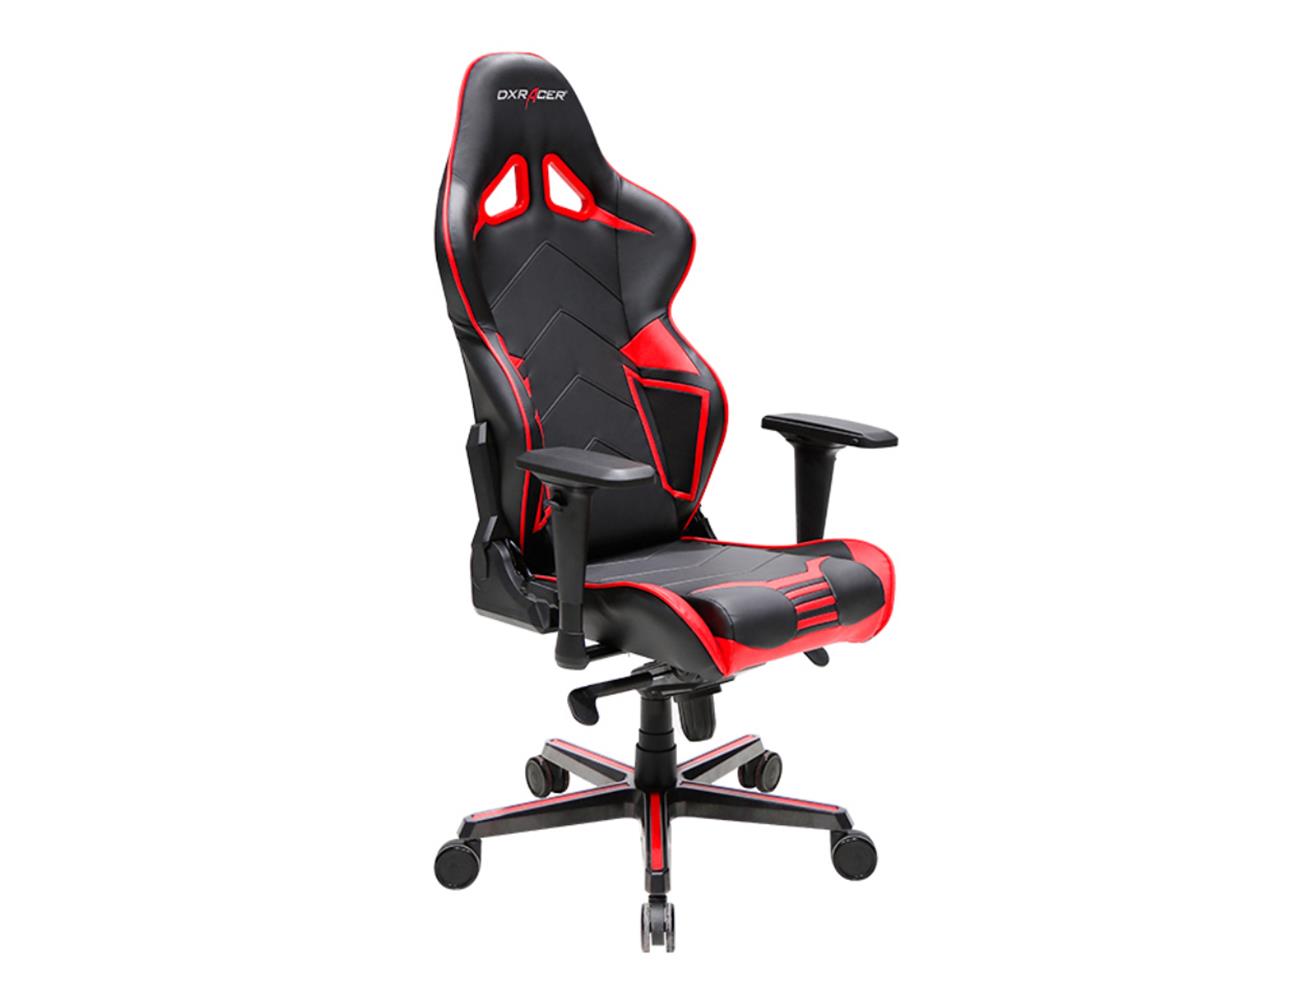  DXRacer  Racing Series Gaming  Chair  Black Red Blink Kuwait